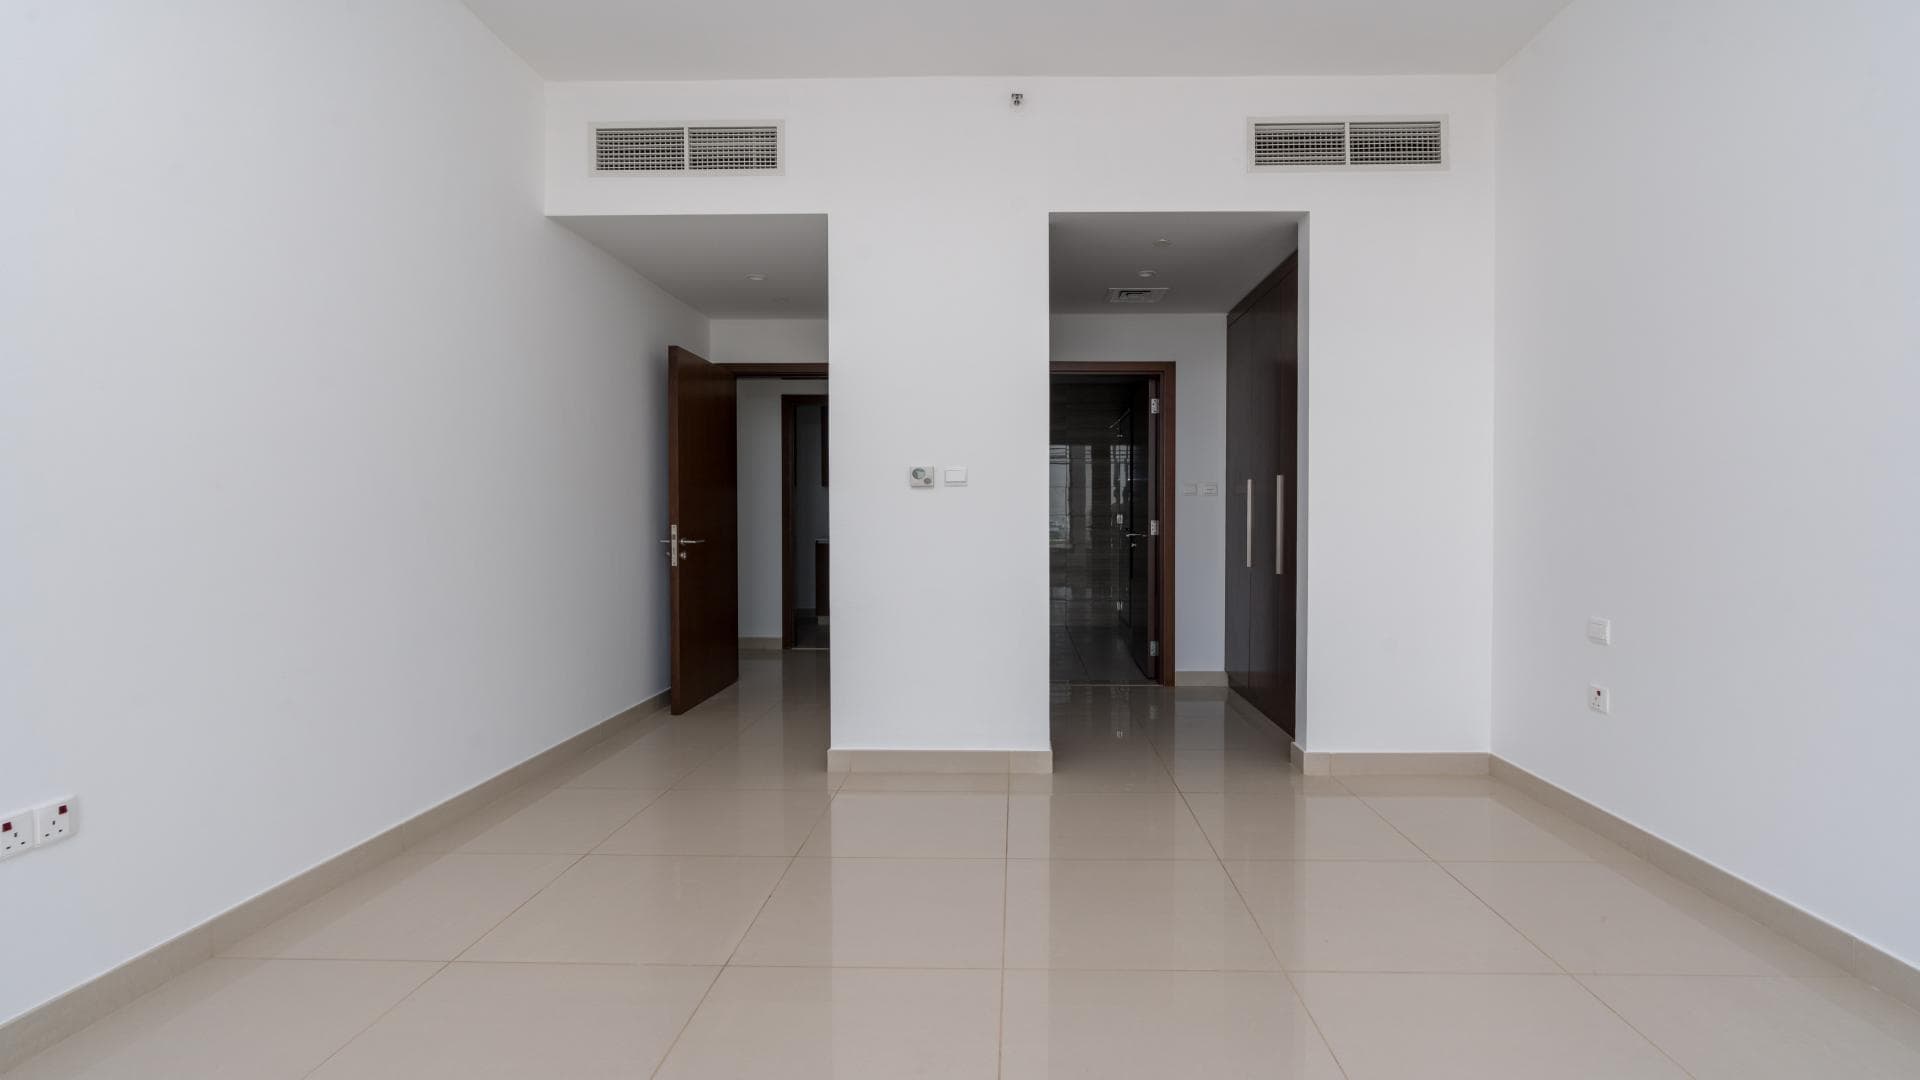 2 Bedroom Apartment For Rent Mira Oasis 2 Lp36581 2a21e3e355d9e200.jpg